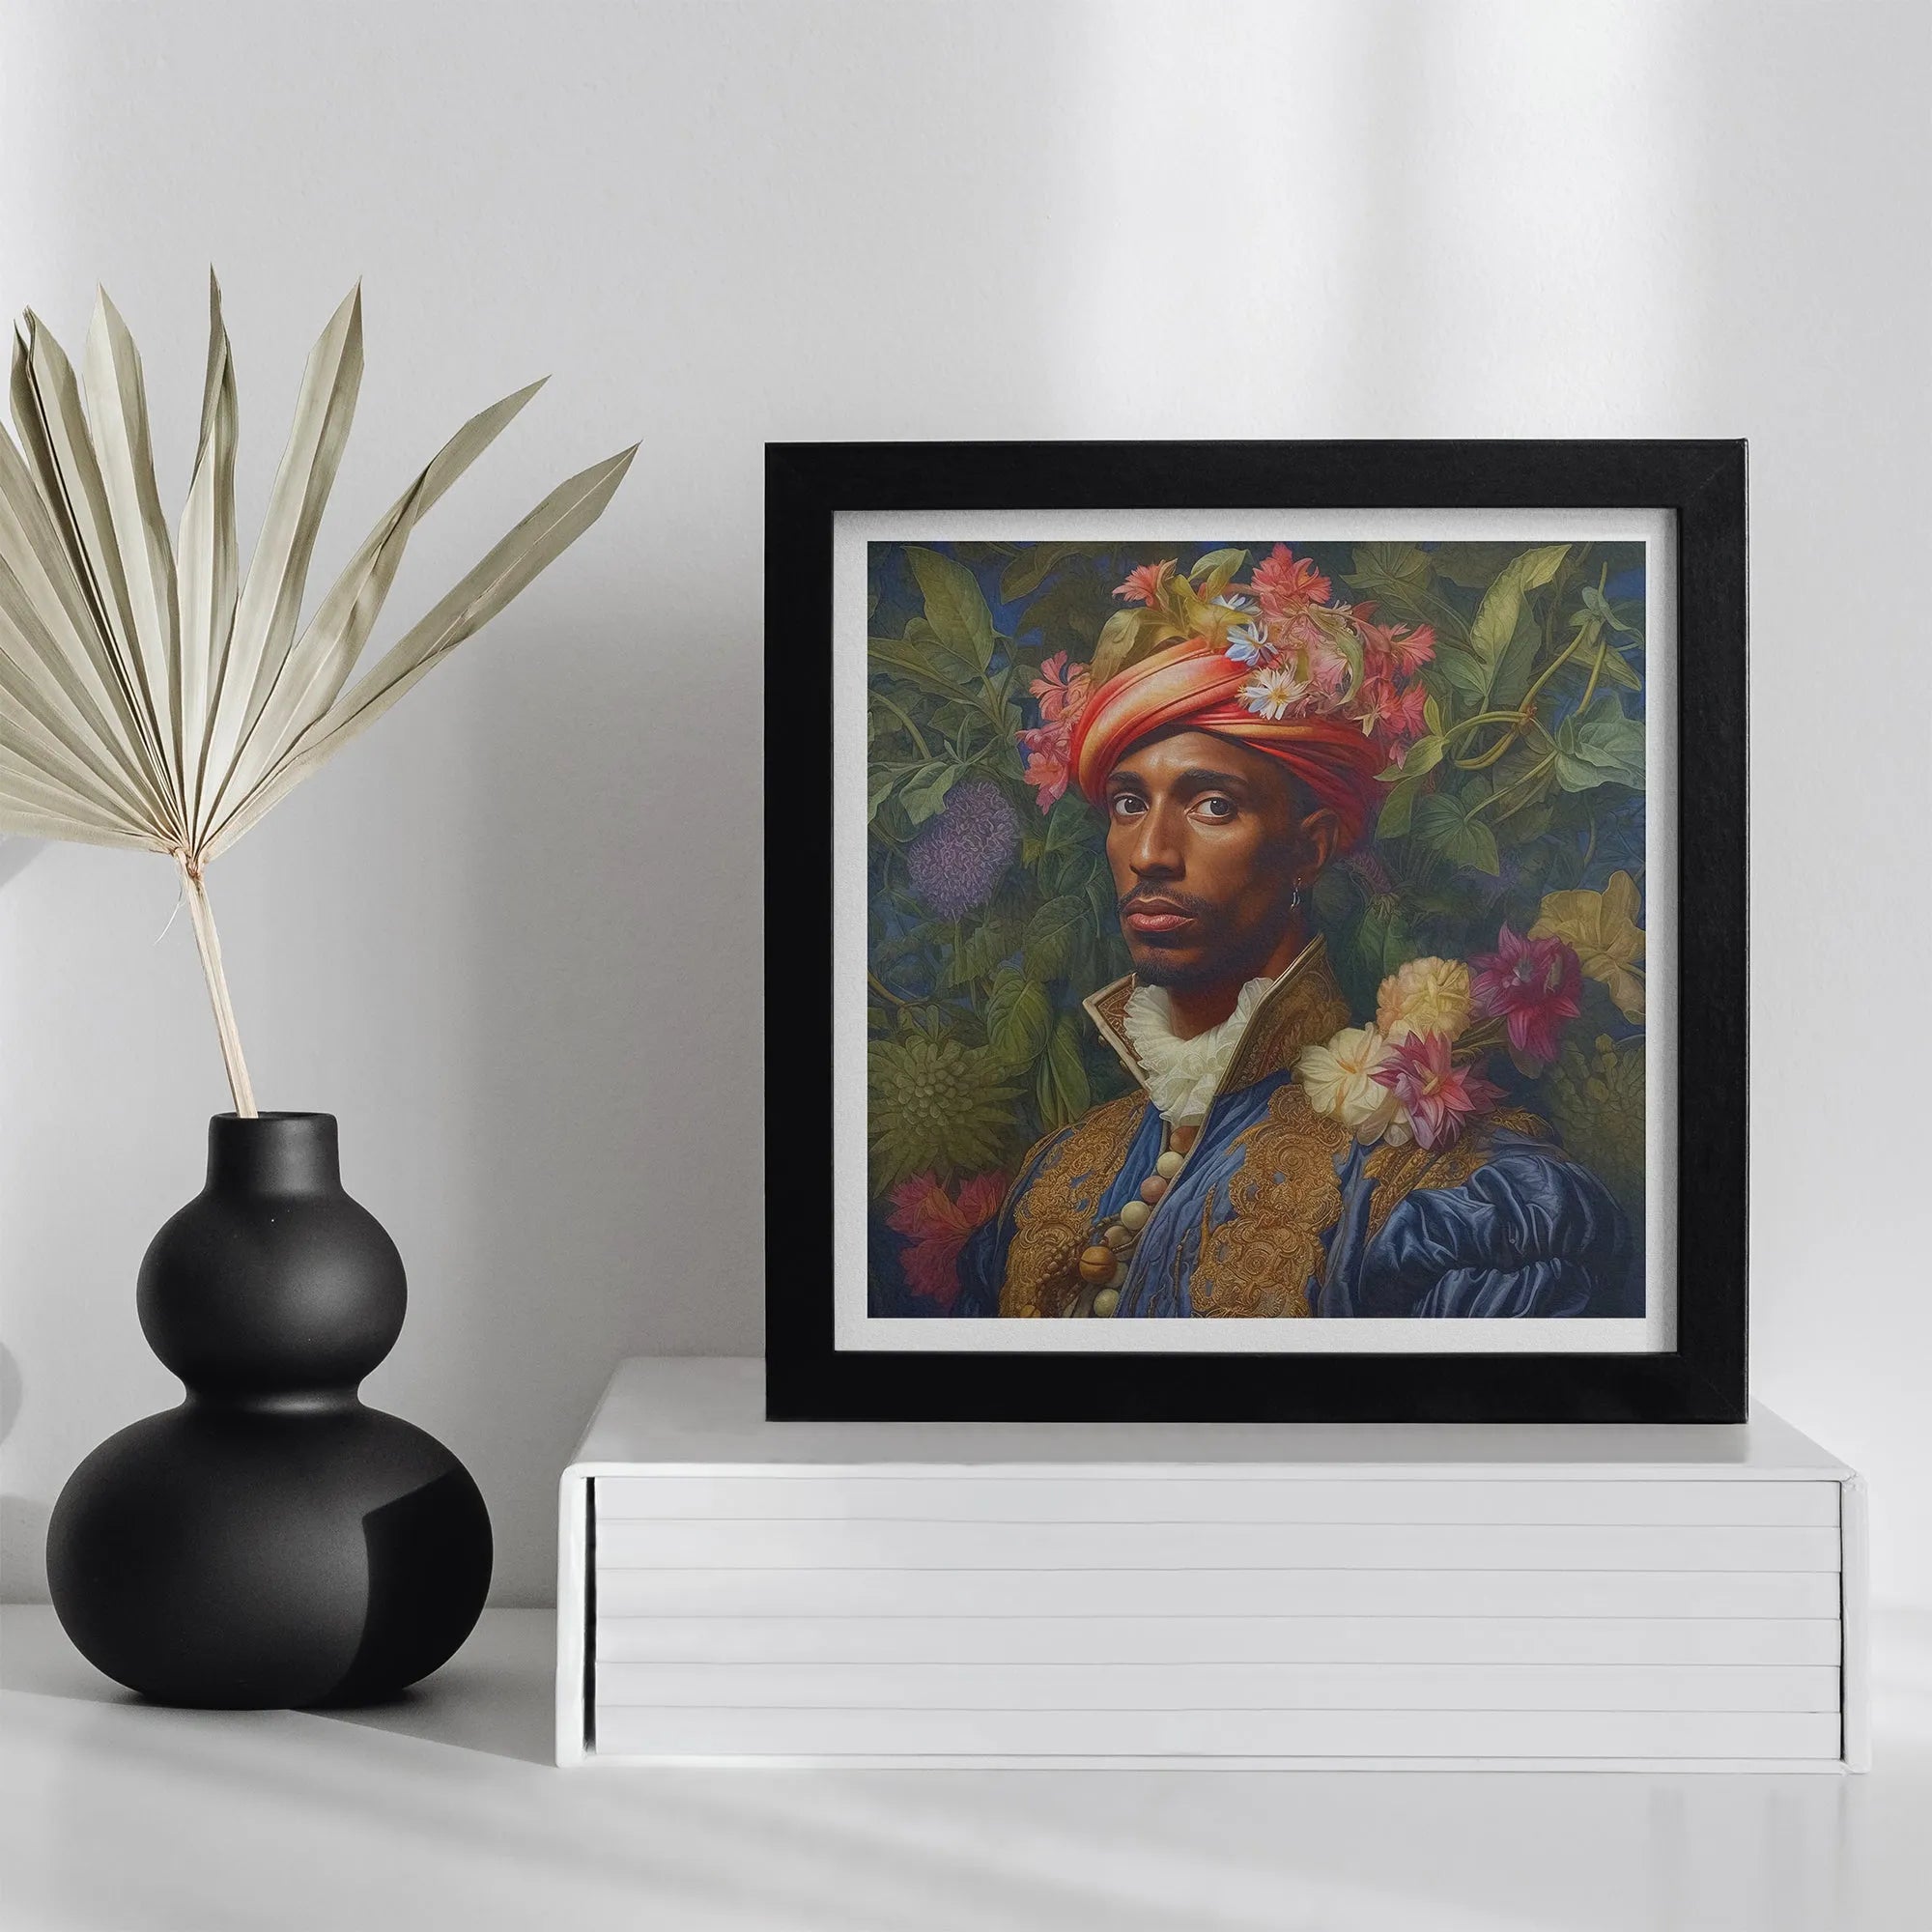 Prince Isaiah - Afroamerican Gay Black Royalty Queerart - 12’x12’ - Posters Prints & Visual Artwork - Aesthetic Art